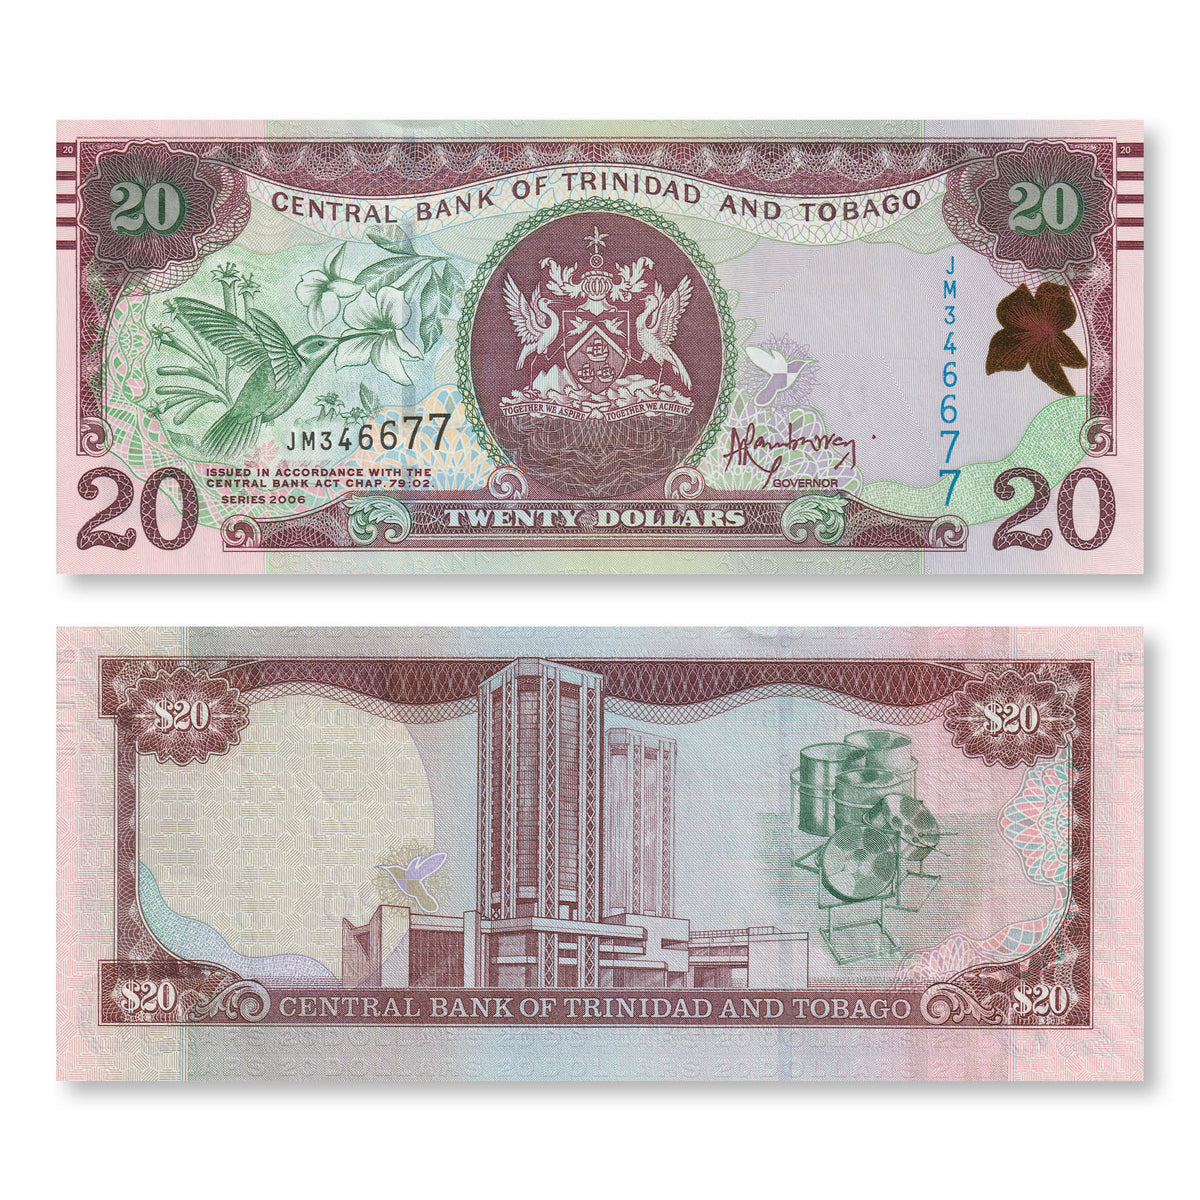 Trinidad & Tobago 20 Dollars, 2006 (2013), B231a, P49b, UNC - Robert's World Money - World Banknotes